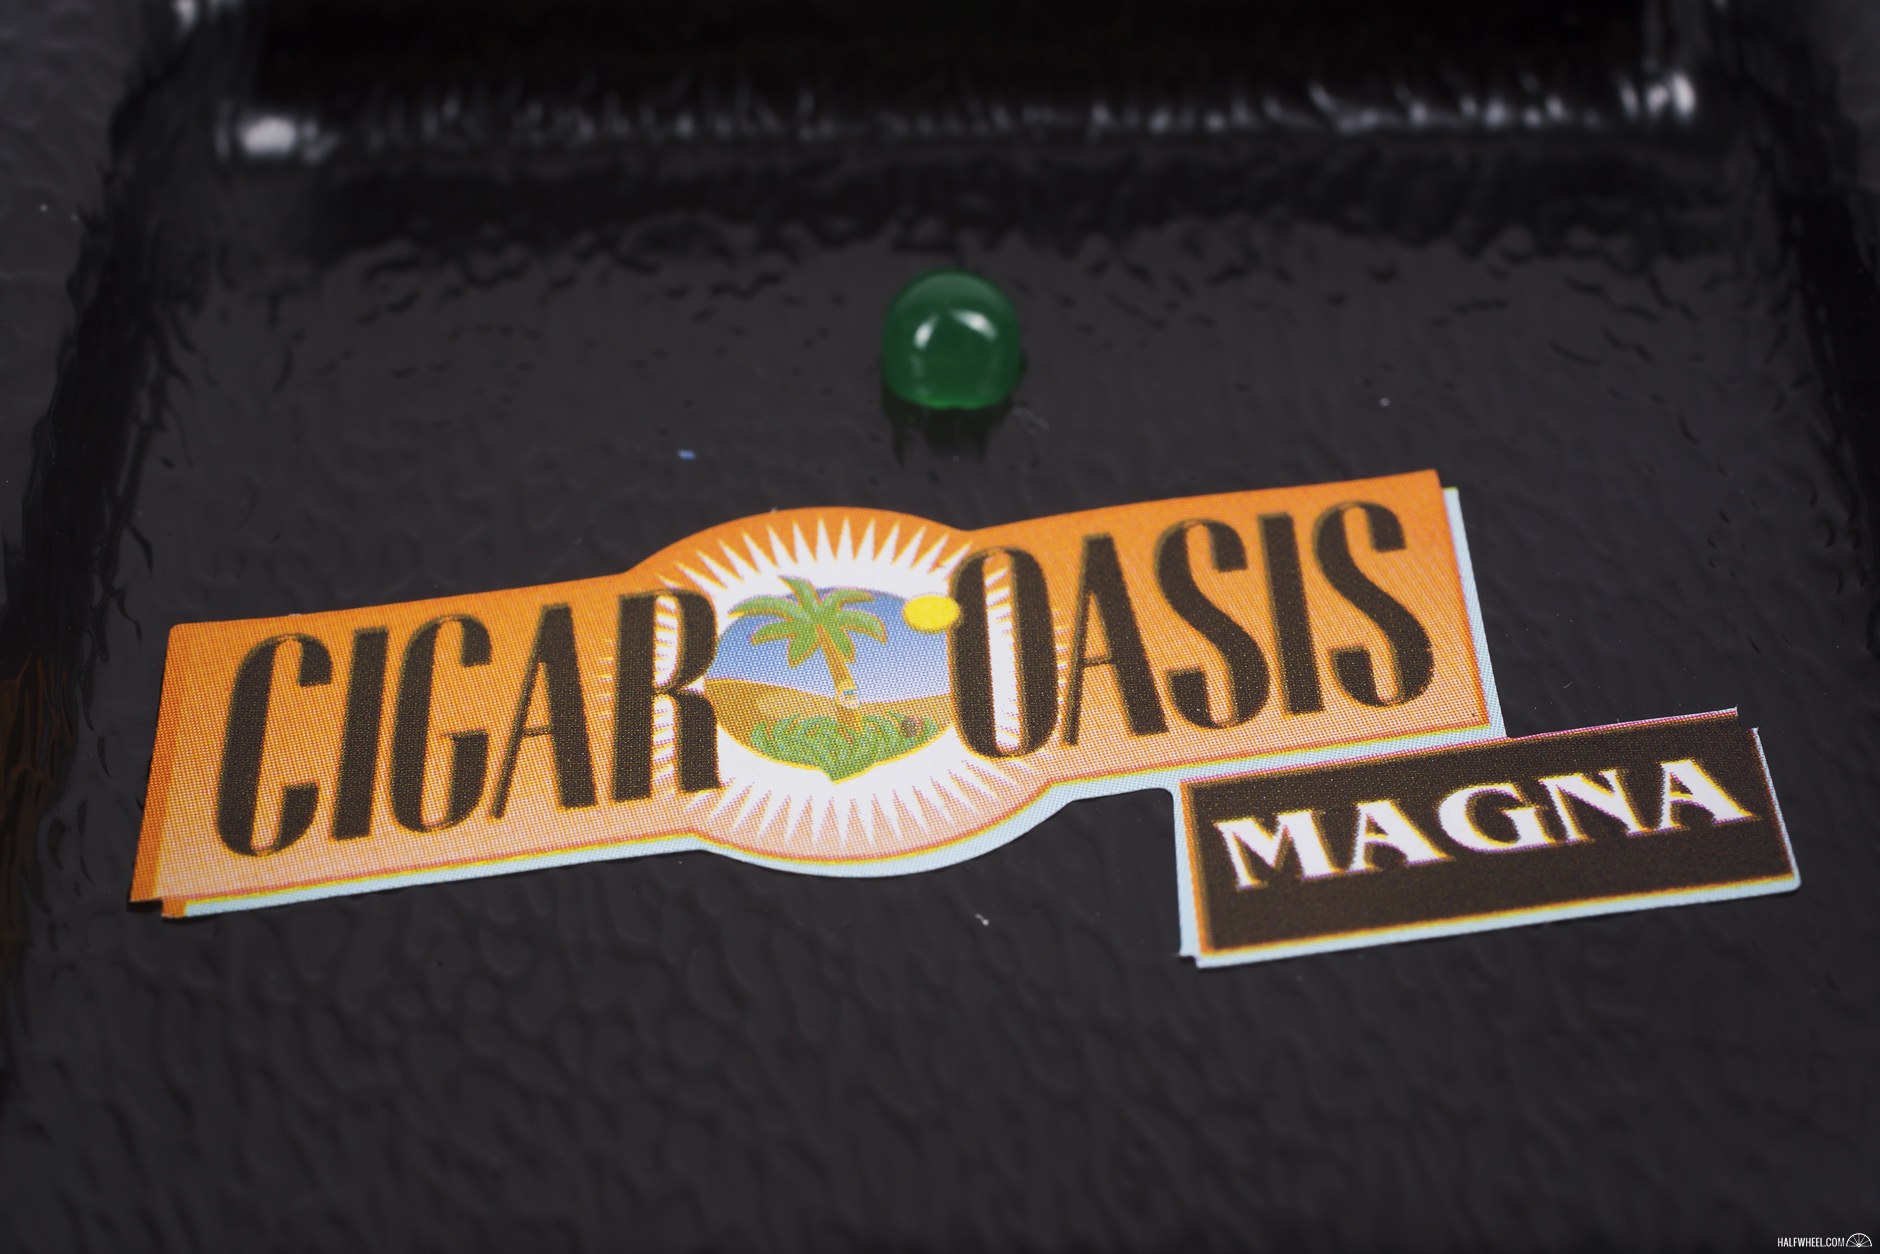 cigar-oasis-magna-2-feature